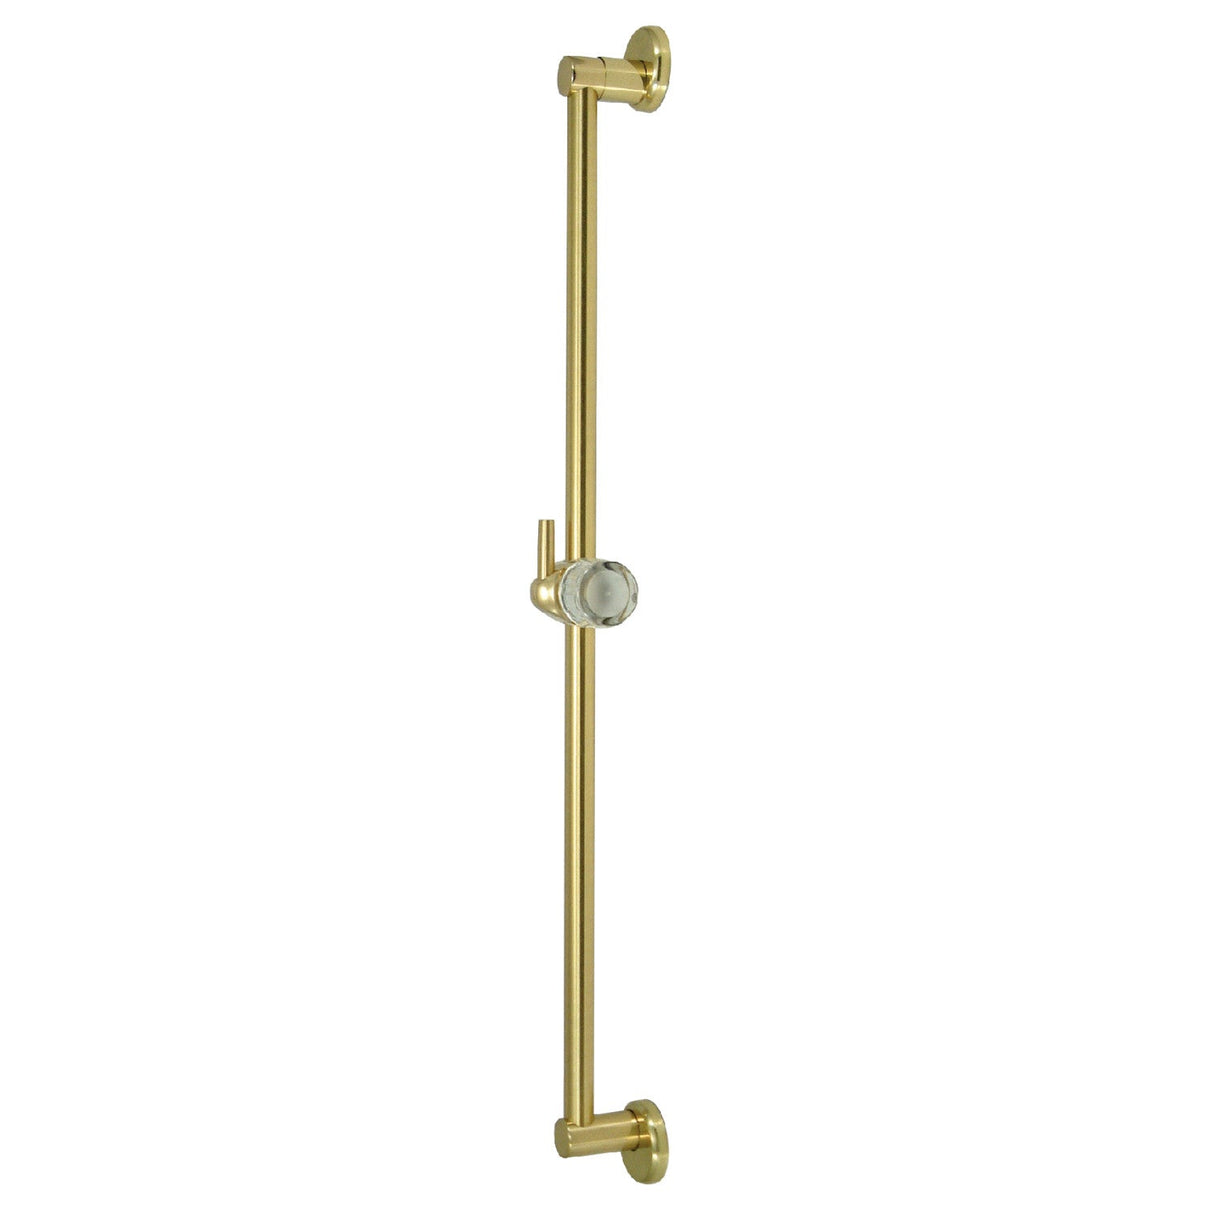 Shower Scape K180A2 24-Inch Shower Slide Bar with Pin Mount Hook, Polished Brass